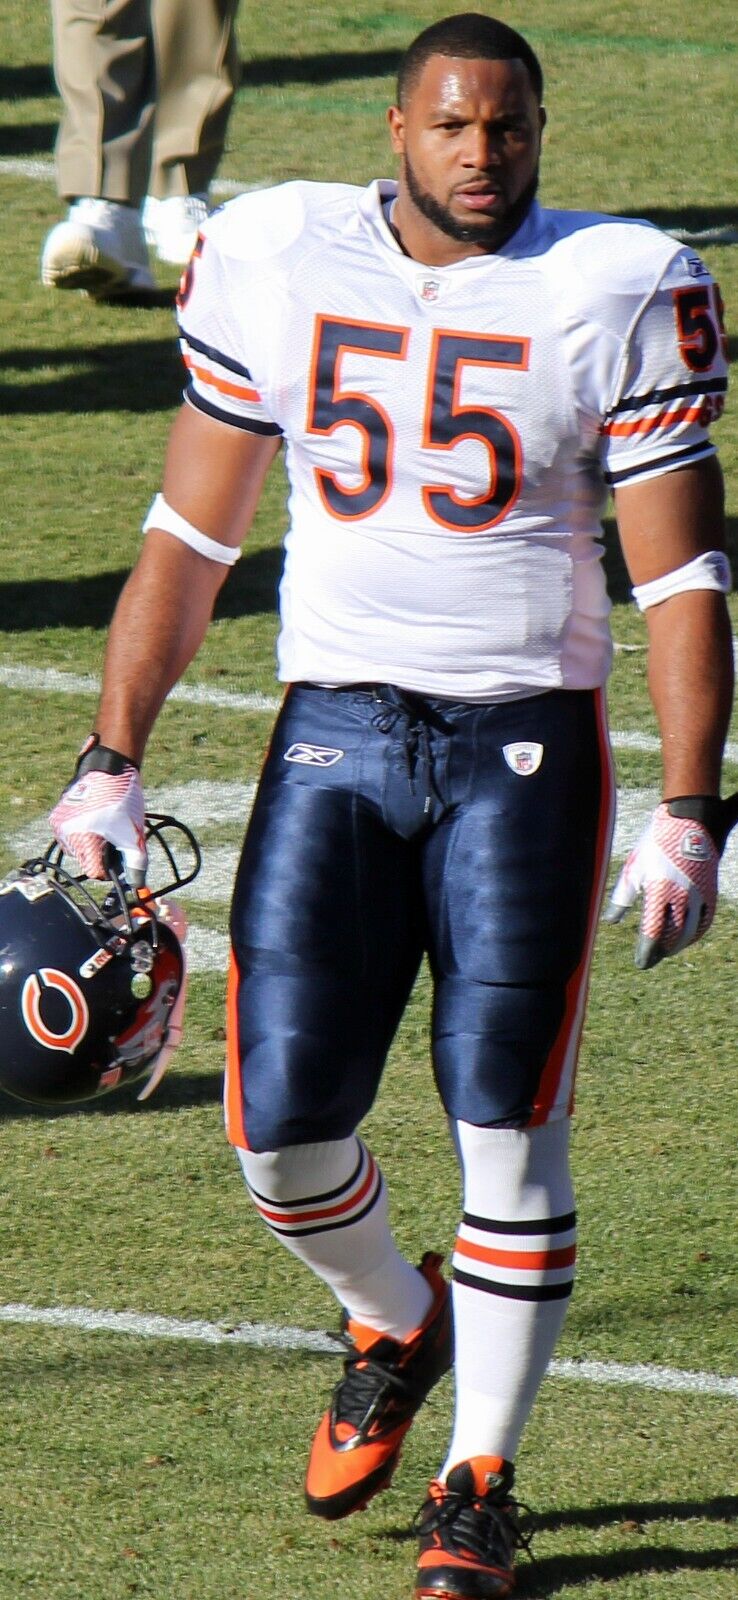 Lance Briggs Signed NFL Football (JSA COA) Chicago Bears Linebacker (2003-2014)